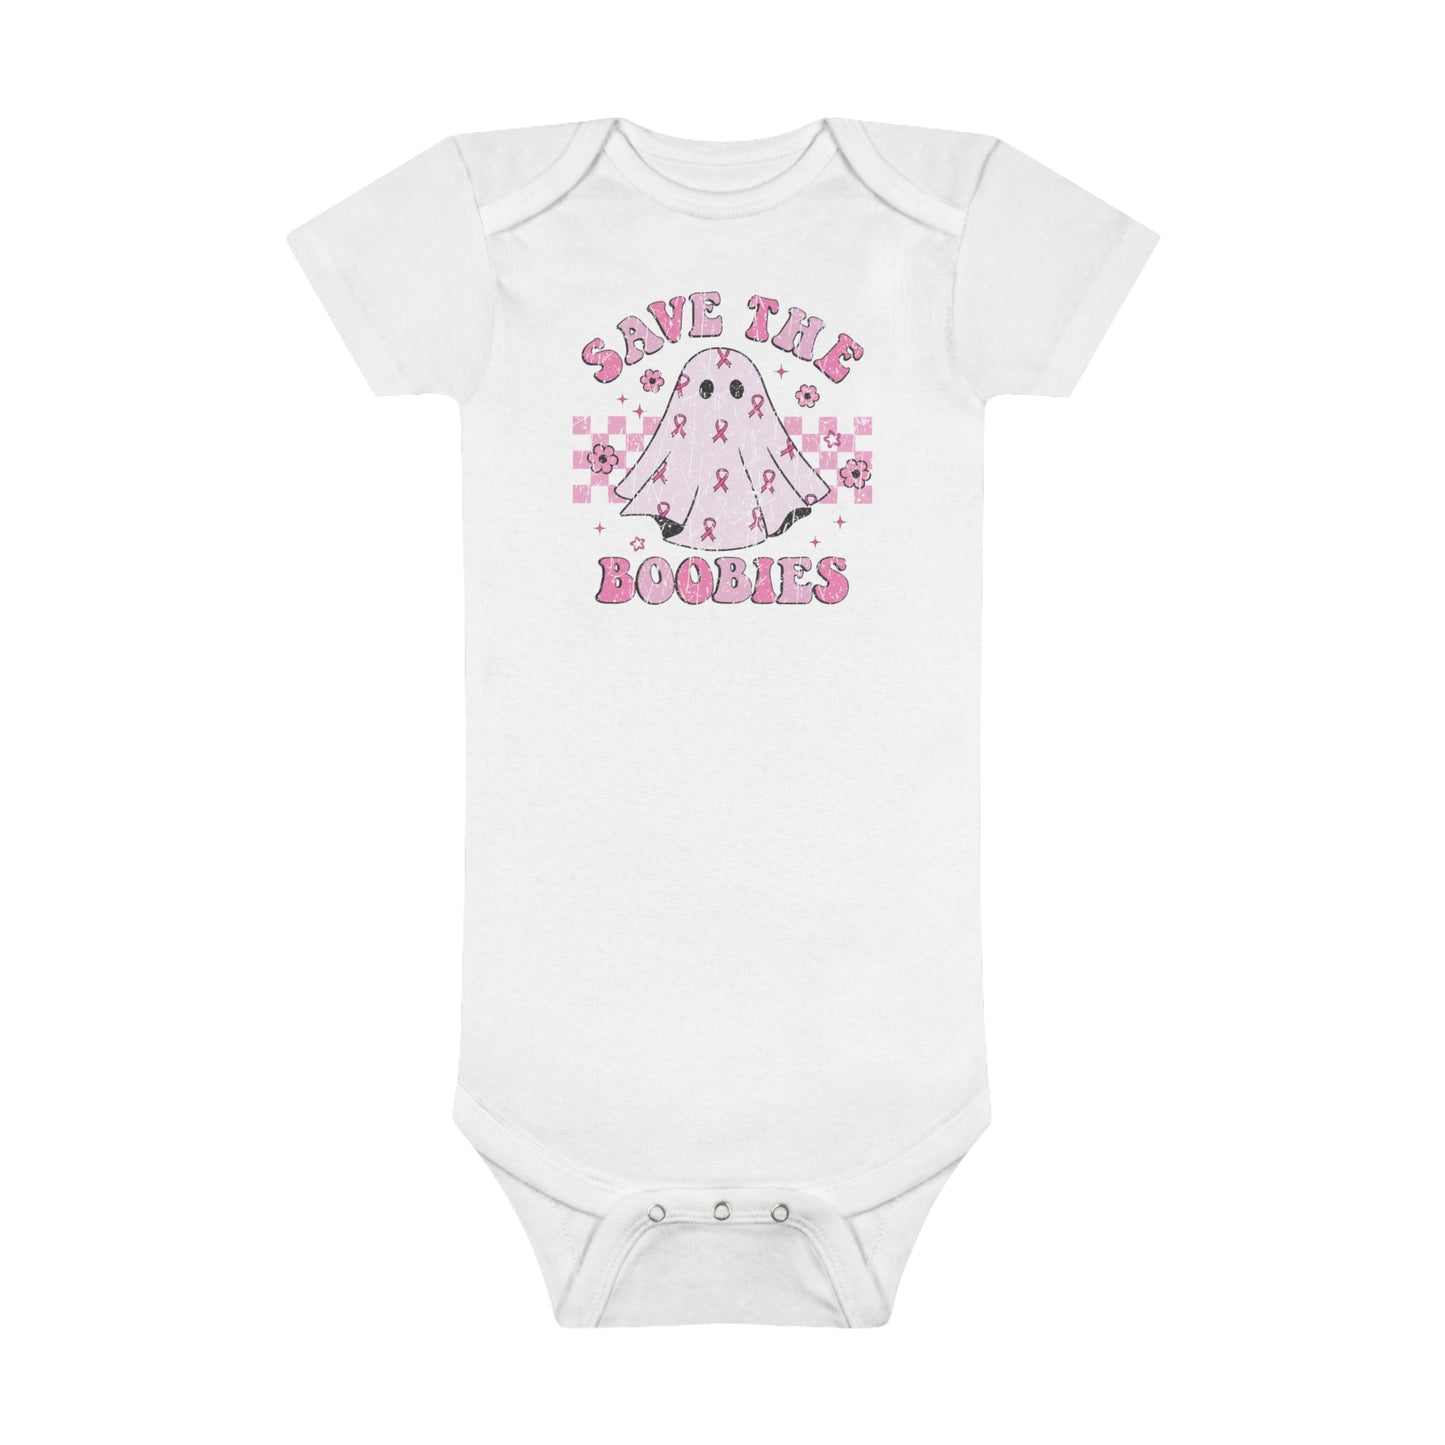 Save The Boobies Onesie, Baby Short Sleeve Onesie®